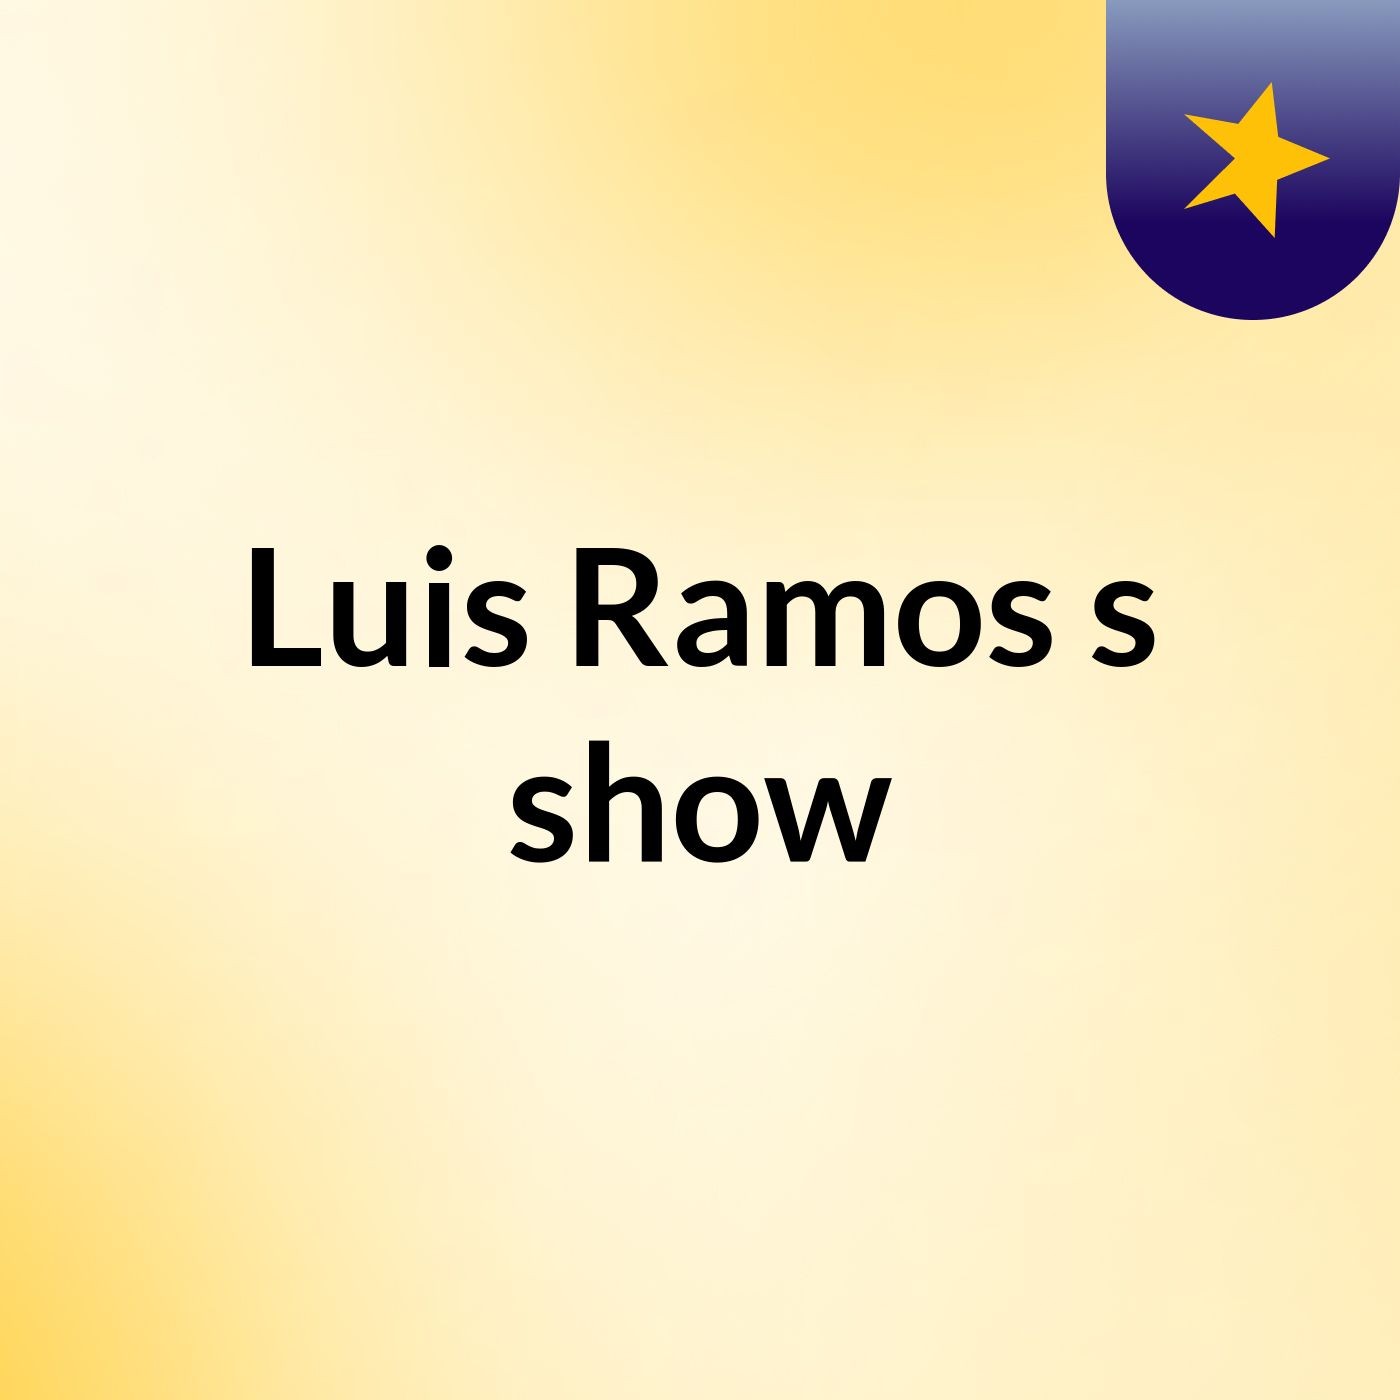 Luis Ramos's show